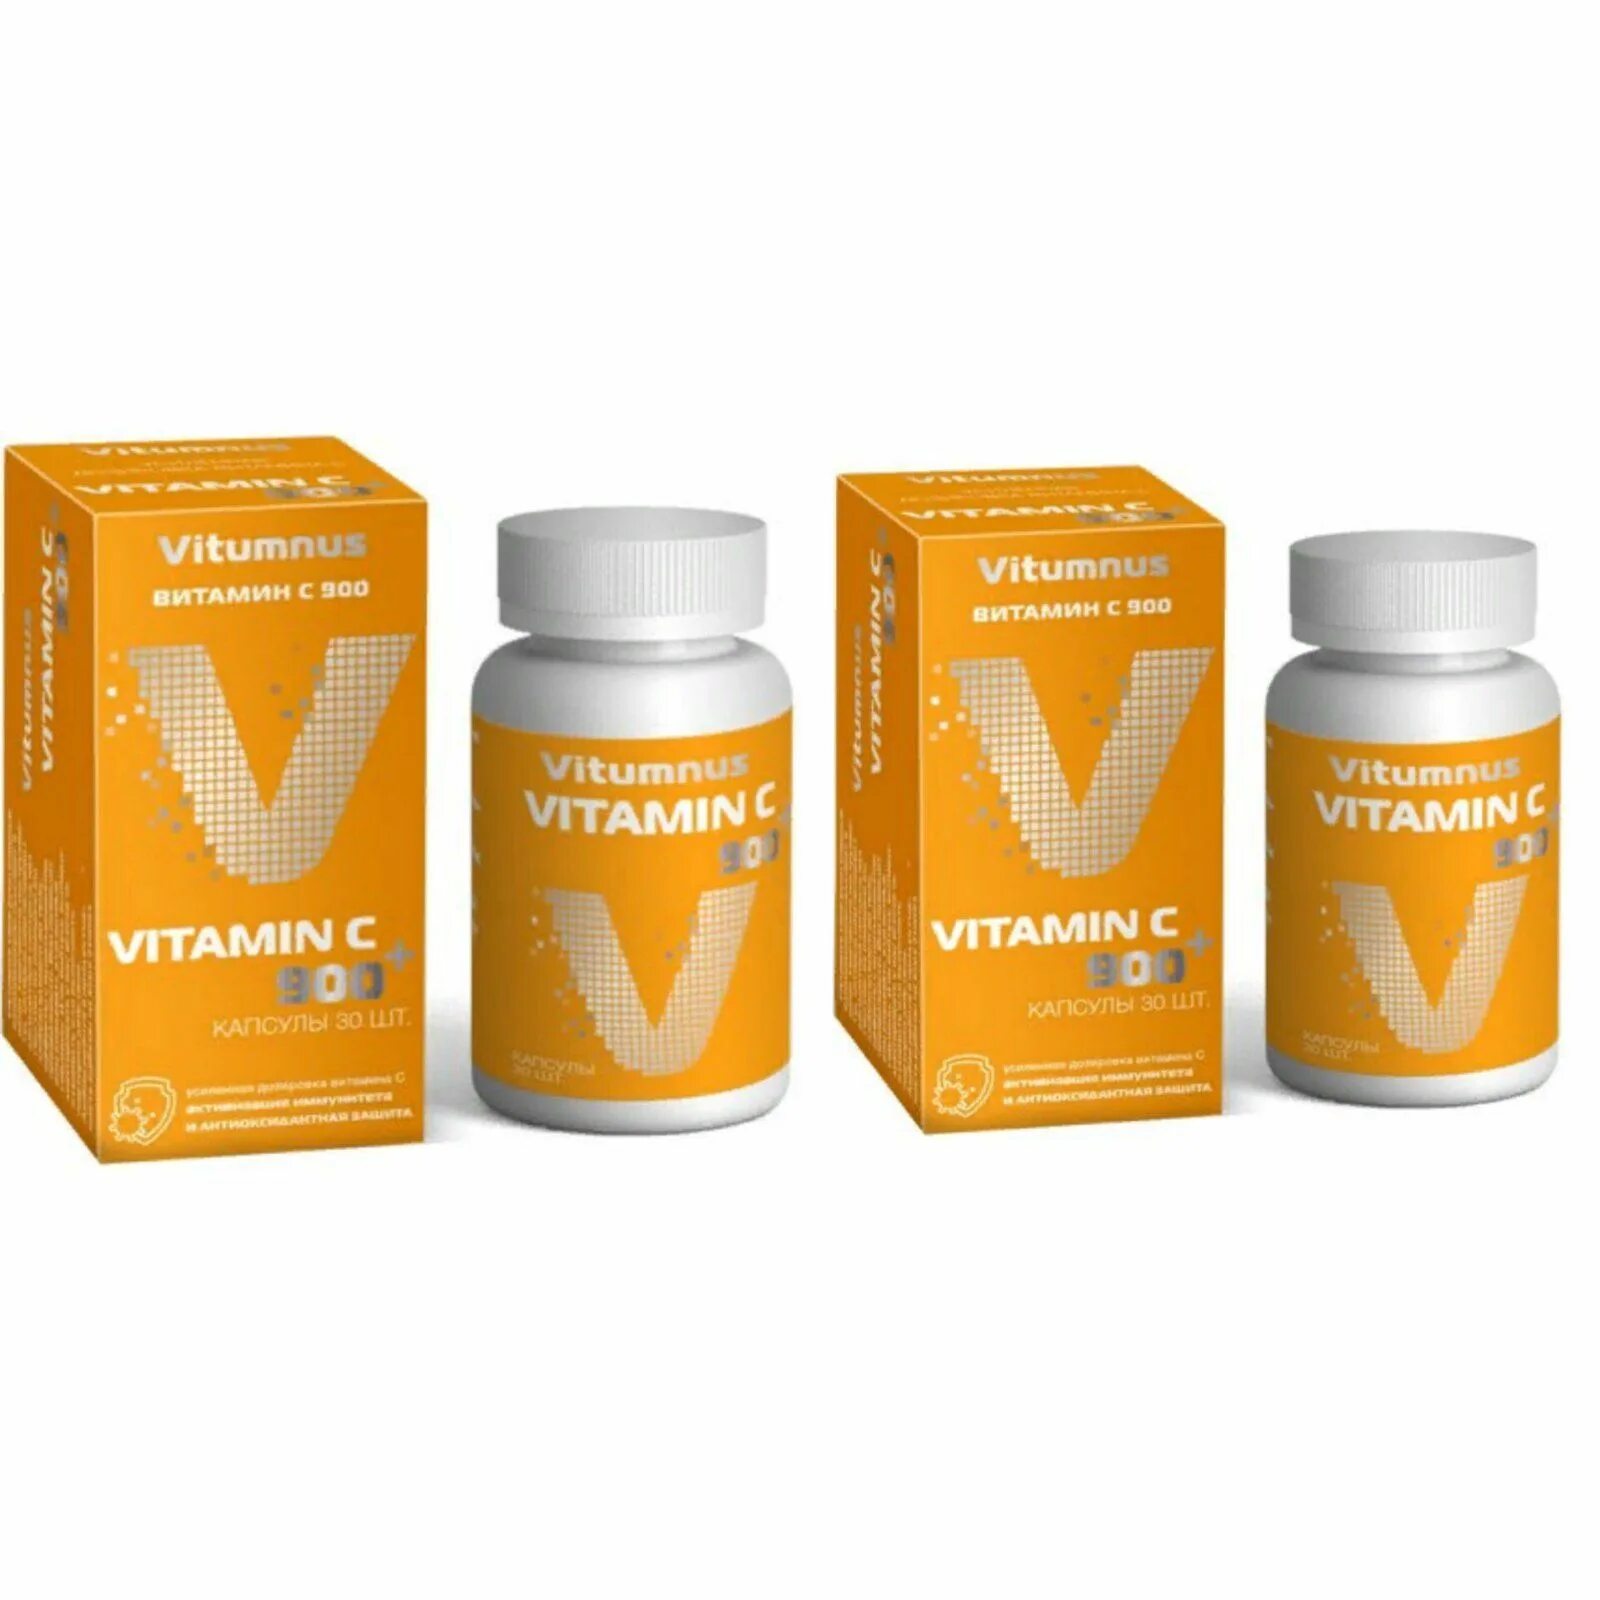 Vitumnus д3 витамин. Vitumnus витамины. Витамин д Vitumnus. Vitumnus витаминно минеральный комплекс. Vitumnus витамины для женщин.